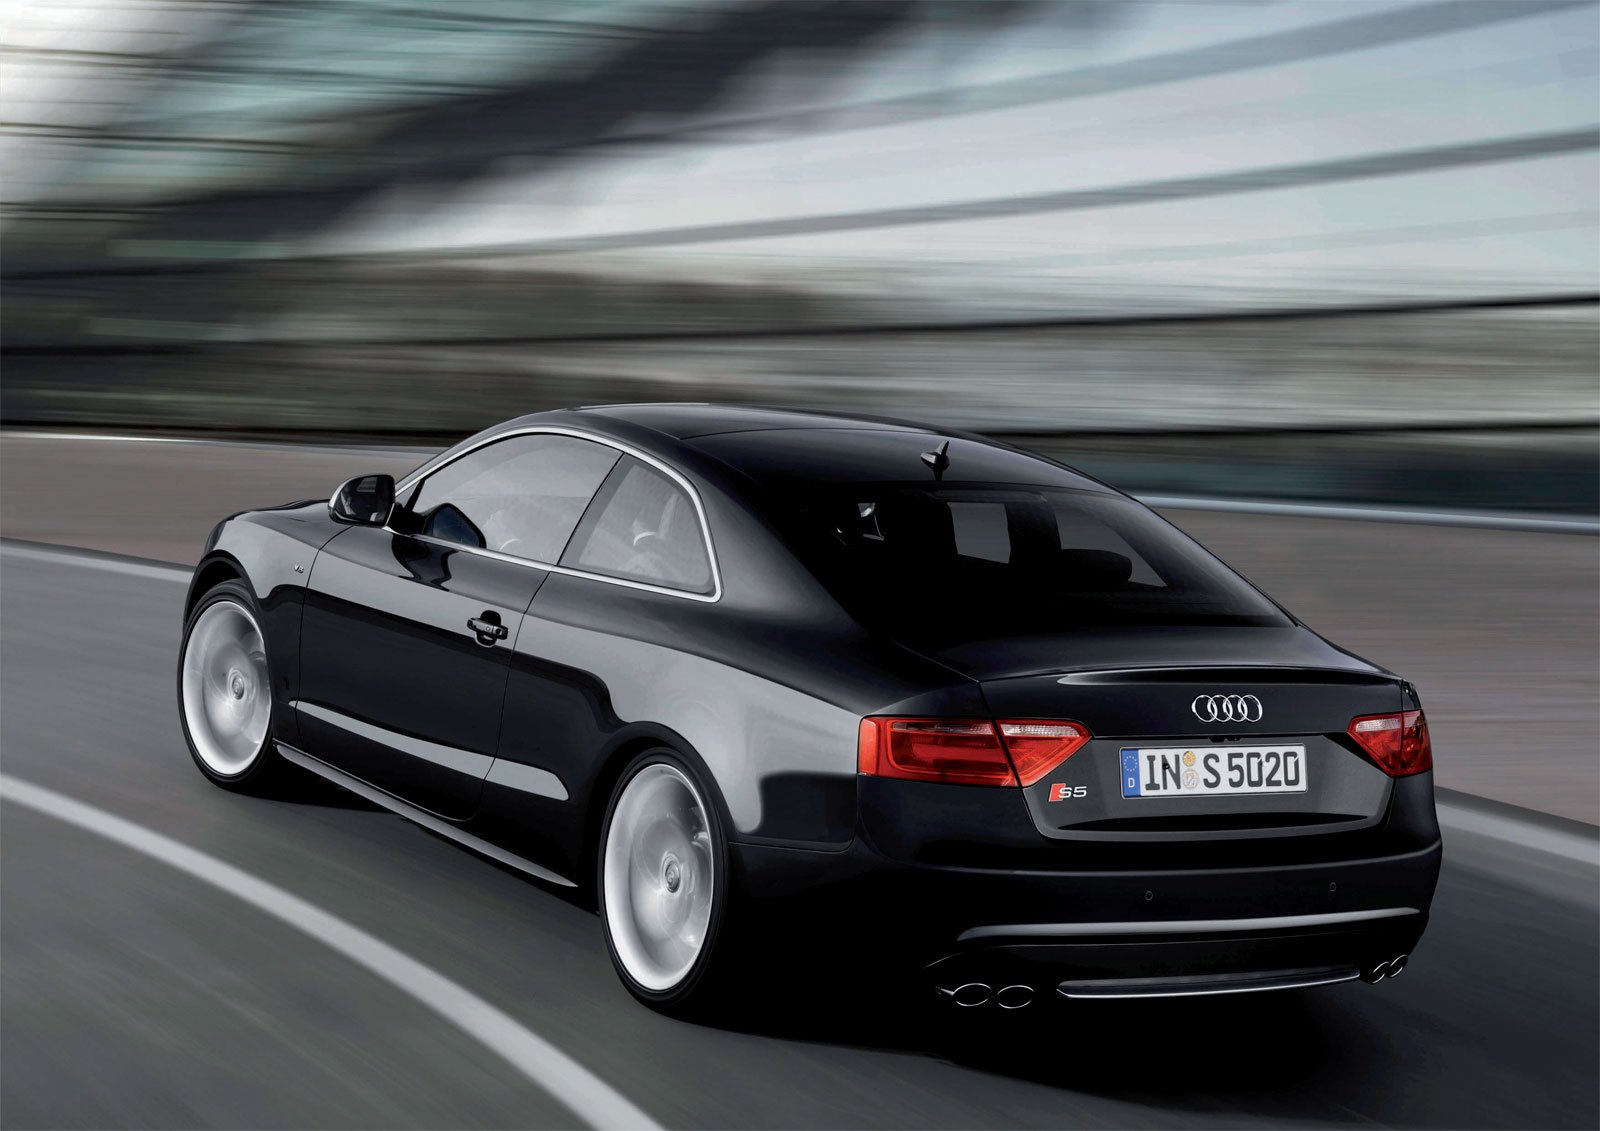  Audi S5 HD WallPaperS Best High Quality Car Desktop Wallpapers in HD